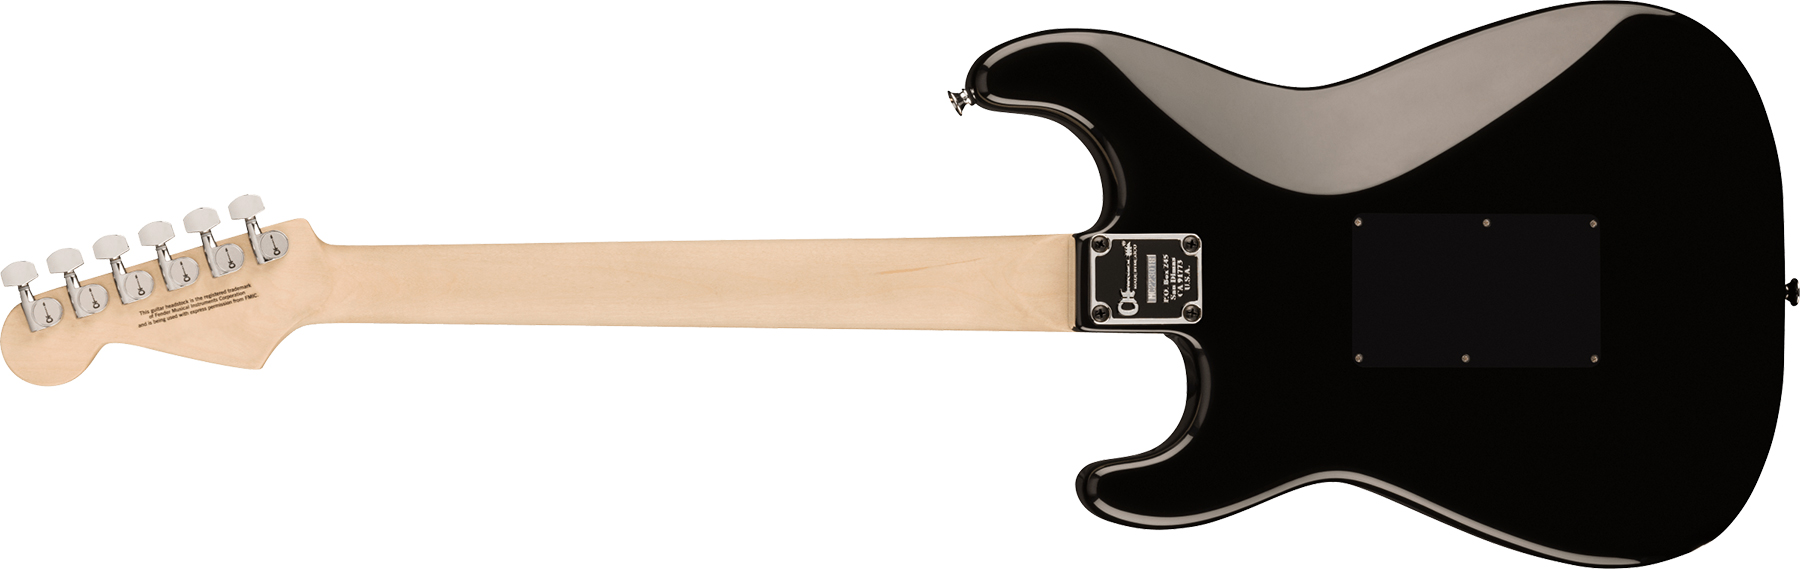 Charvel Pro-mod So-cal Style 1 Hh Fr M 2h Seymour Duncan Mn - Gloss Black - Str shape electric guitar - Variation 1